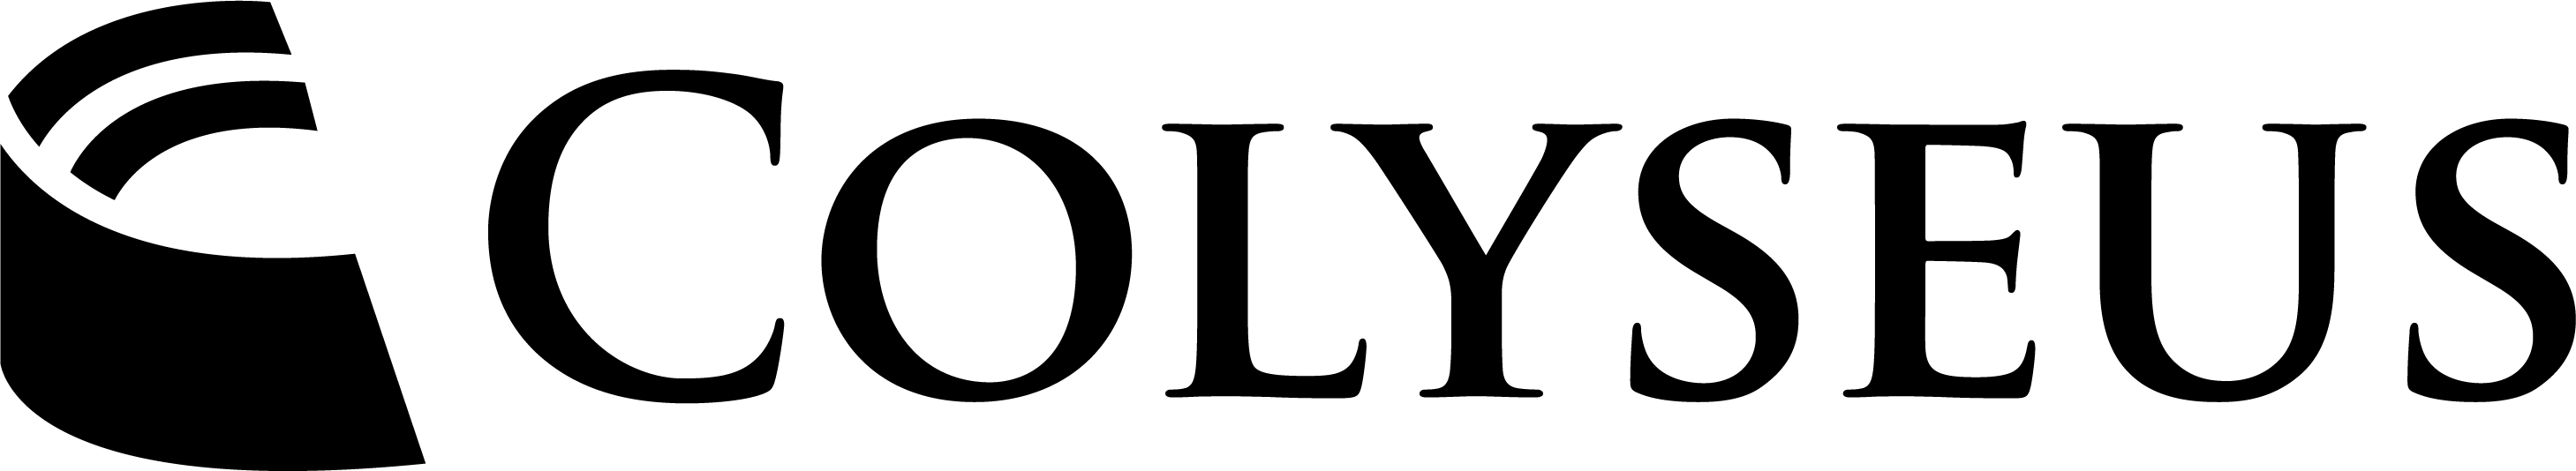 Colyseus Dark Logo